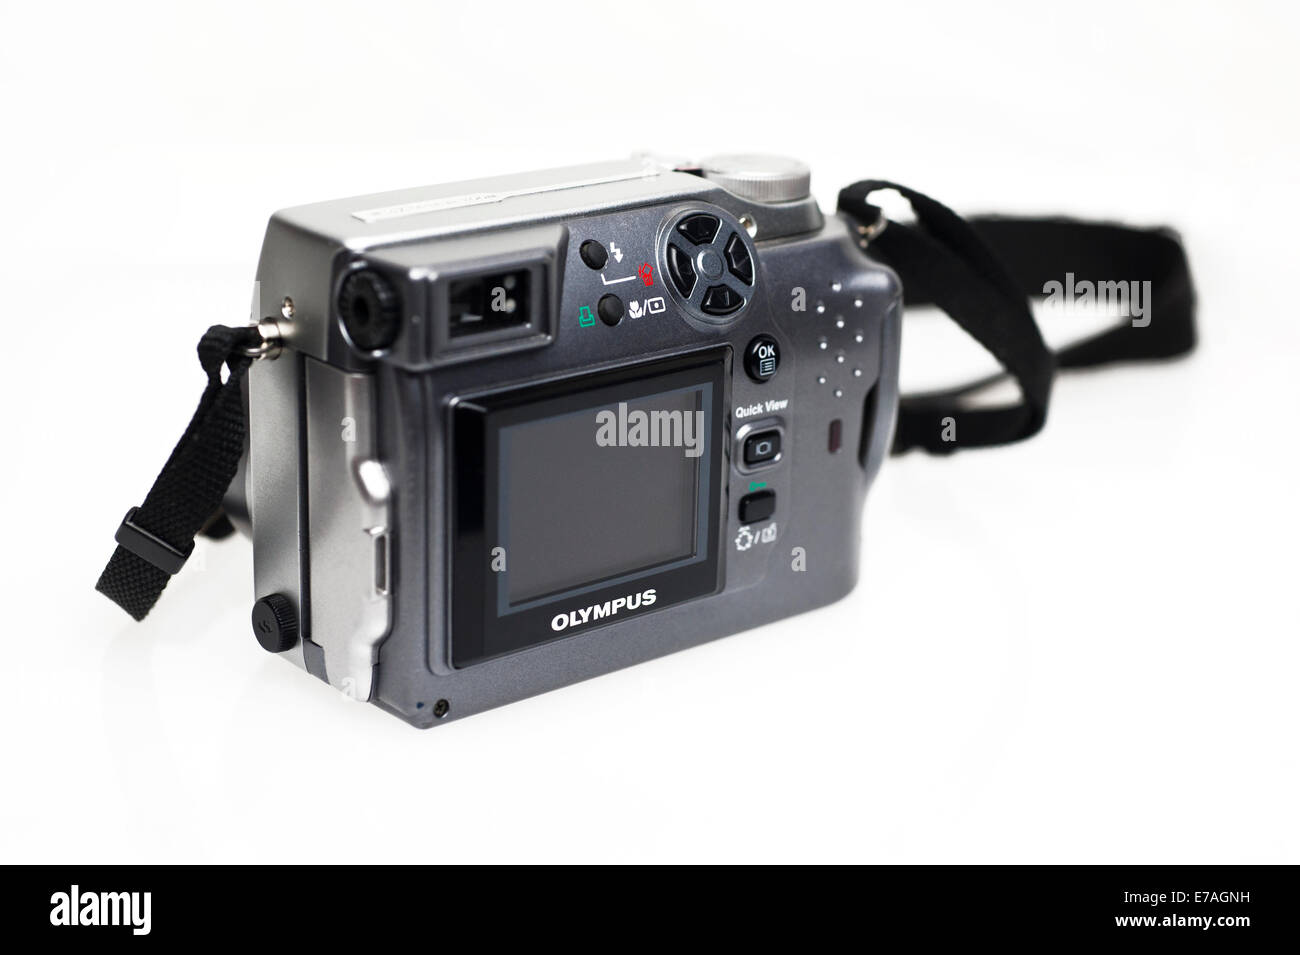 Digitalkamera Olympus Camedia C-4000 Zoom 4.0 Megapixel-Point- and -Shoot Kamera auf weißem Hintergrund Stockfoto